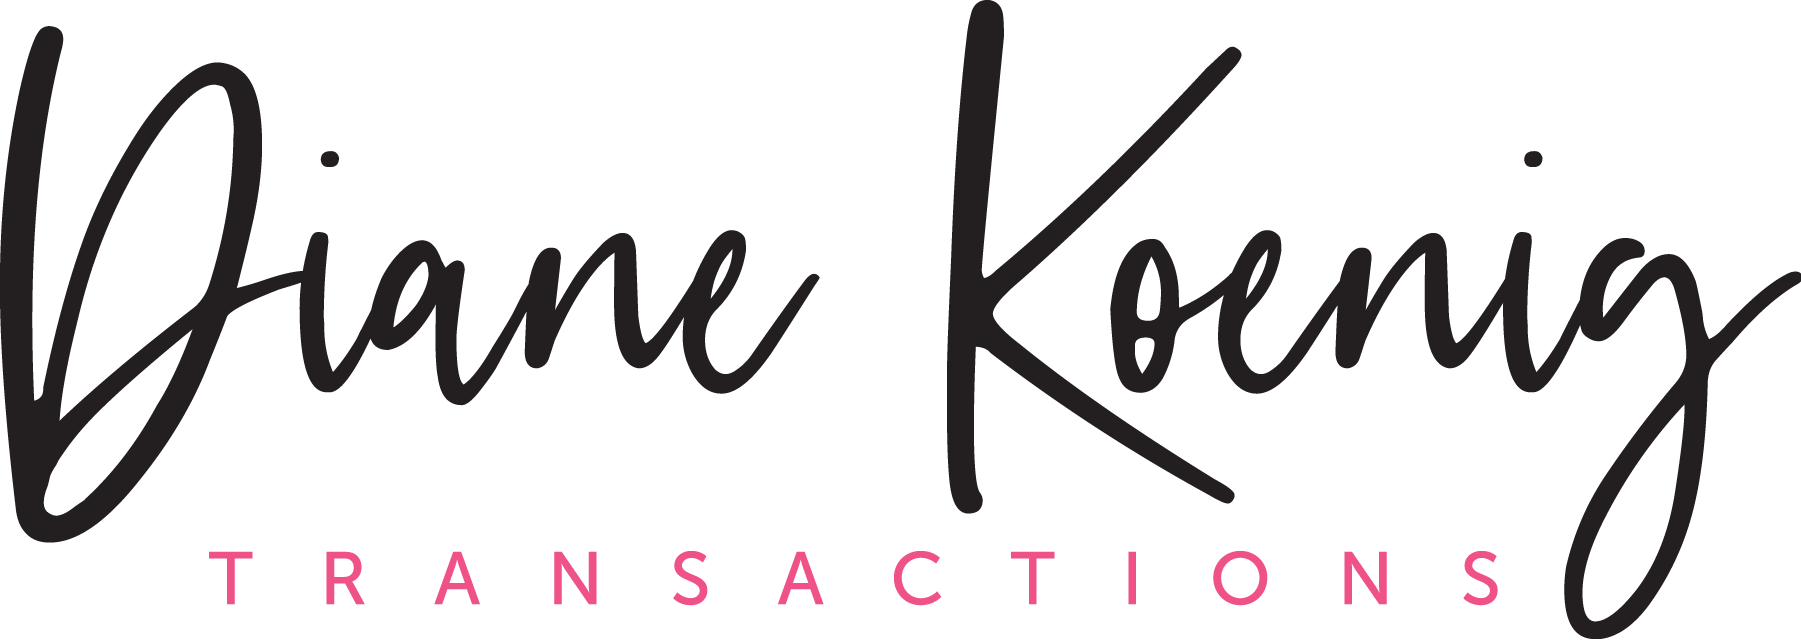 diane koenig transactions logo